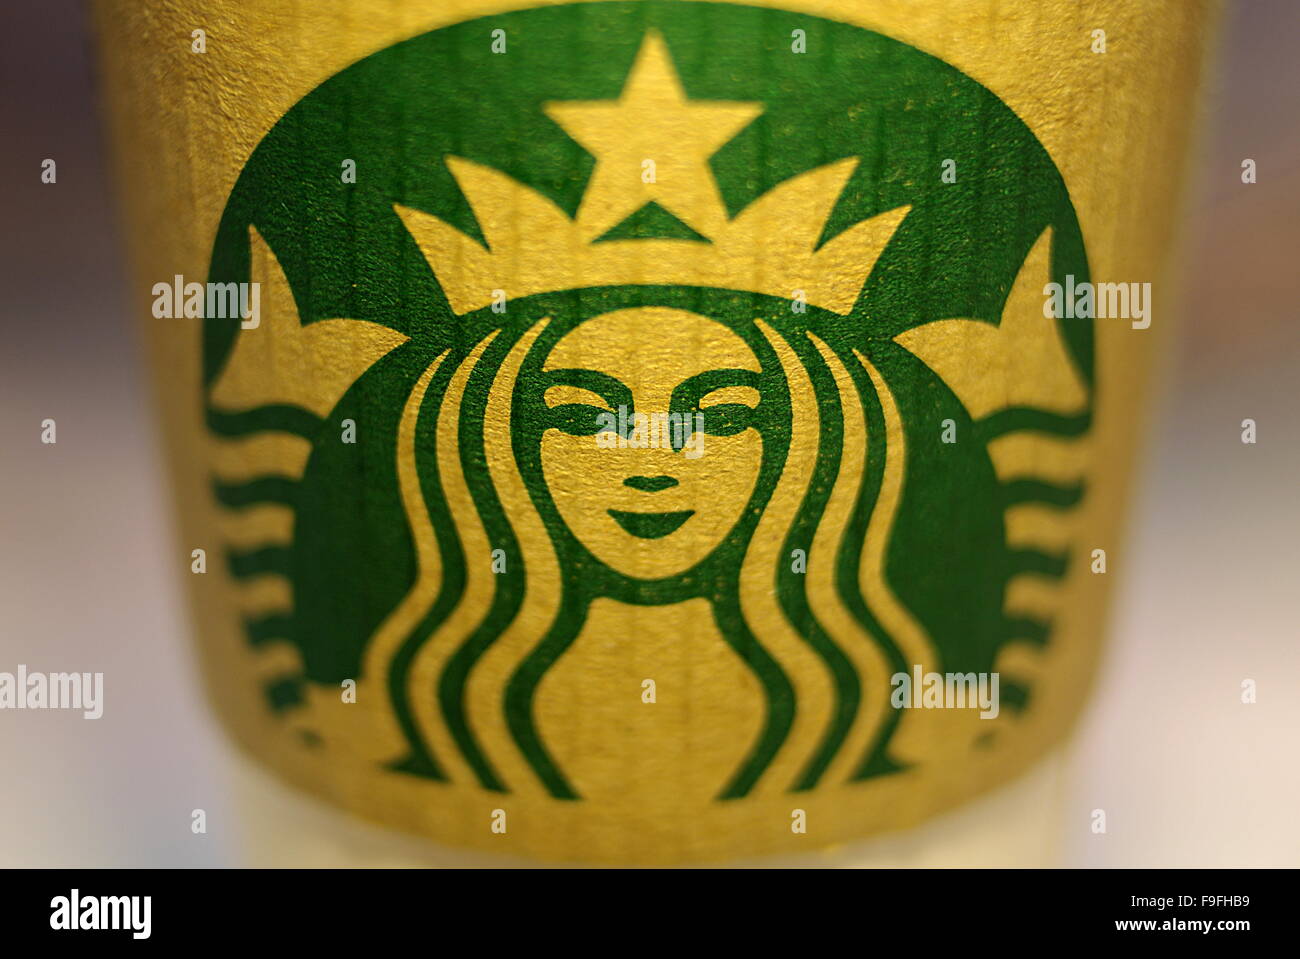 https://c8.alamy.com/comp/F9FHB9/starbucks-logo-on-cardboard-cup-sleeve-F9FHB9.jpg